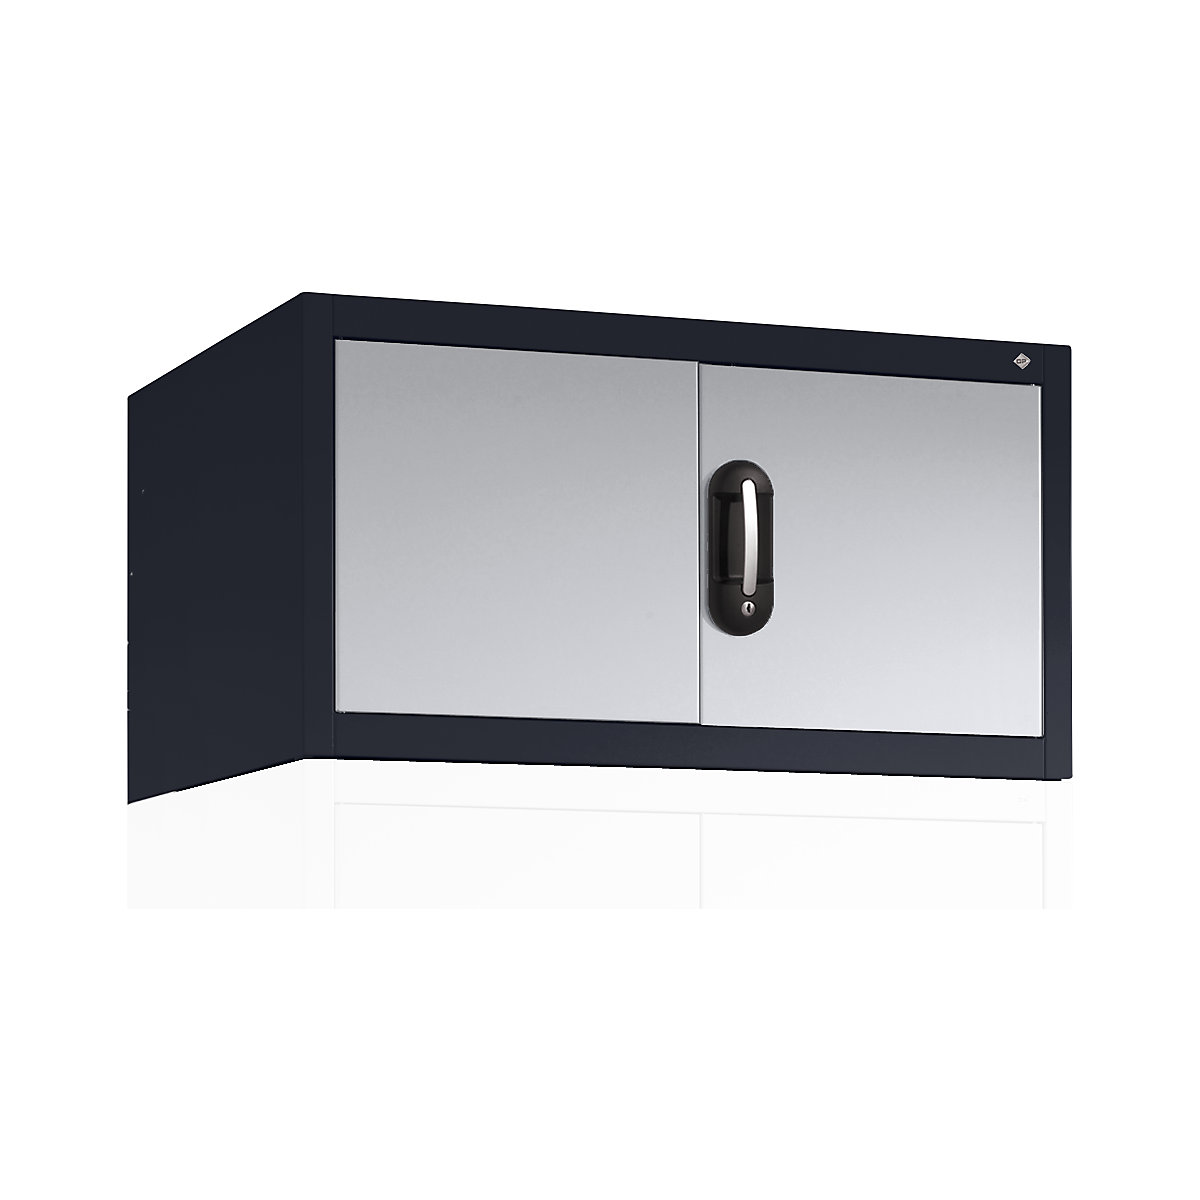 ACURADO add-on cupboard with hinged doors – C+P